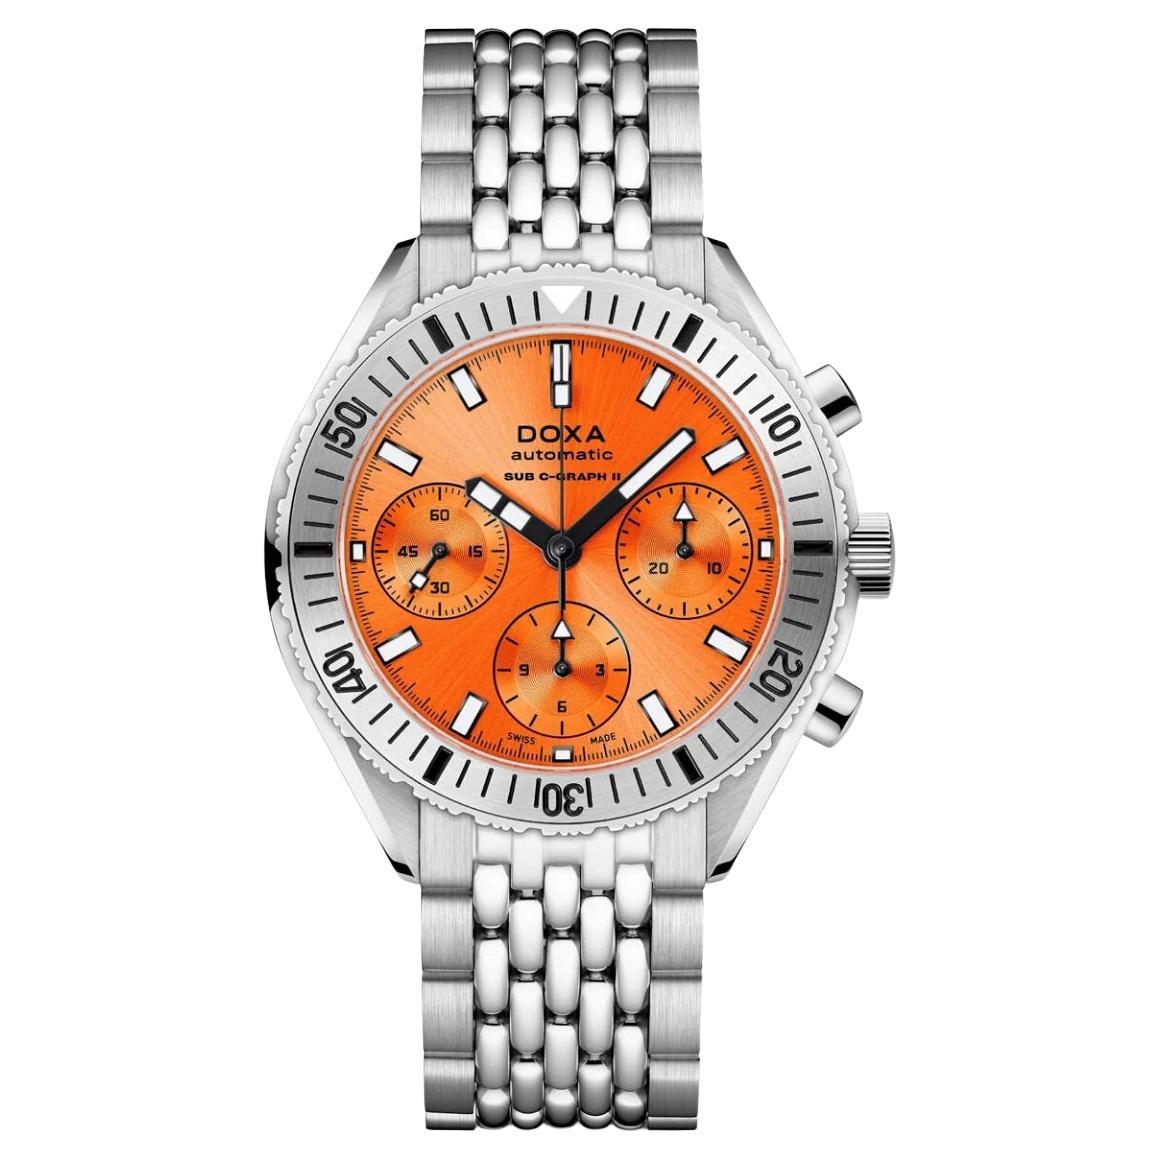 Doxa Sub 200 C-Graph II Professional 42mm Men's Watch 797.10.351.10 For Sale